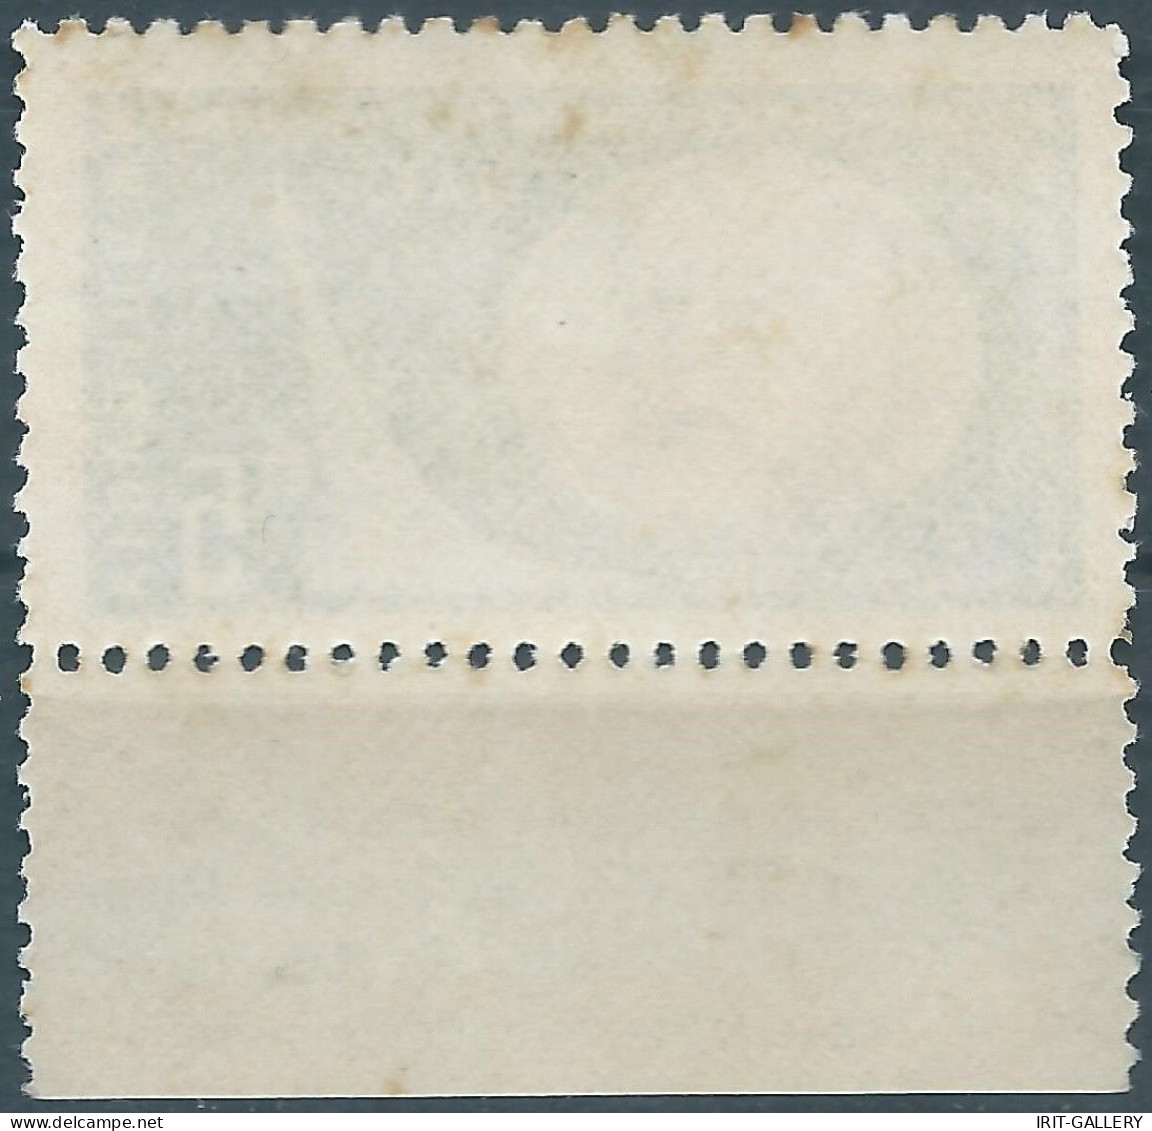 Bulgaria - Bulgarien - Bulgare,1962 Airmail - International Astronautical Congress,Varna,Mint,Value:€4,00 - Ungebraucht